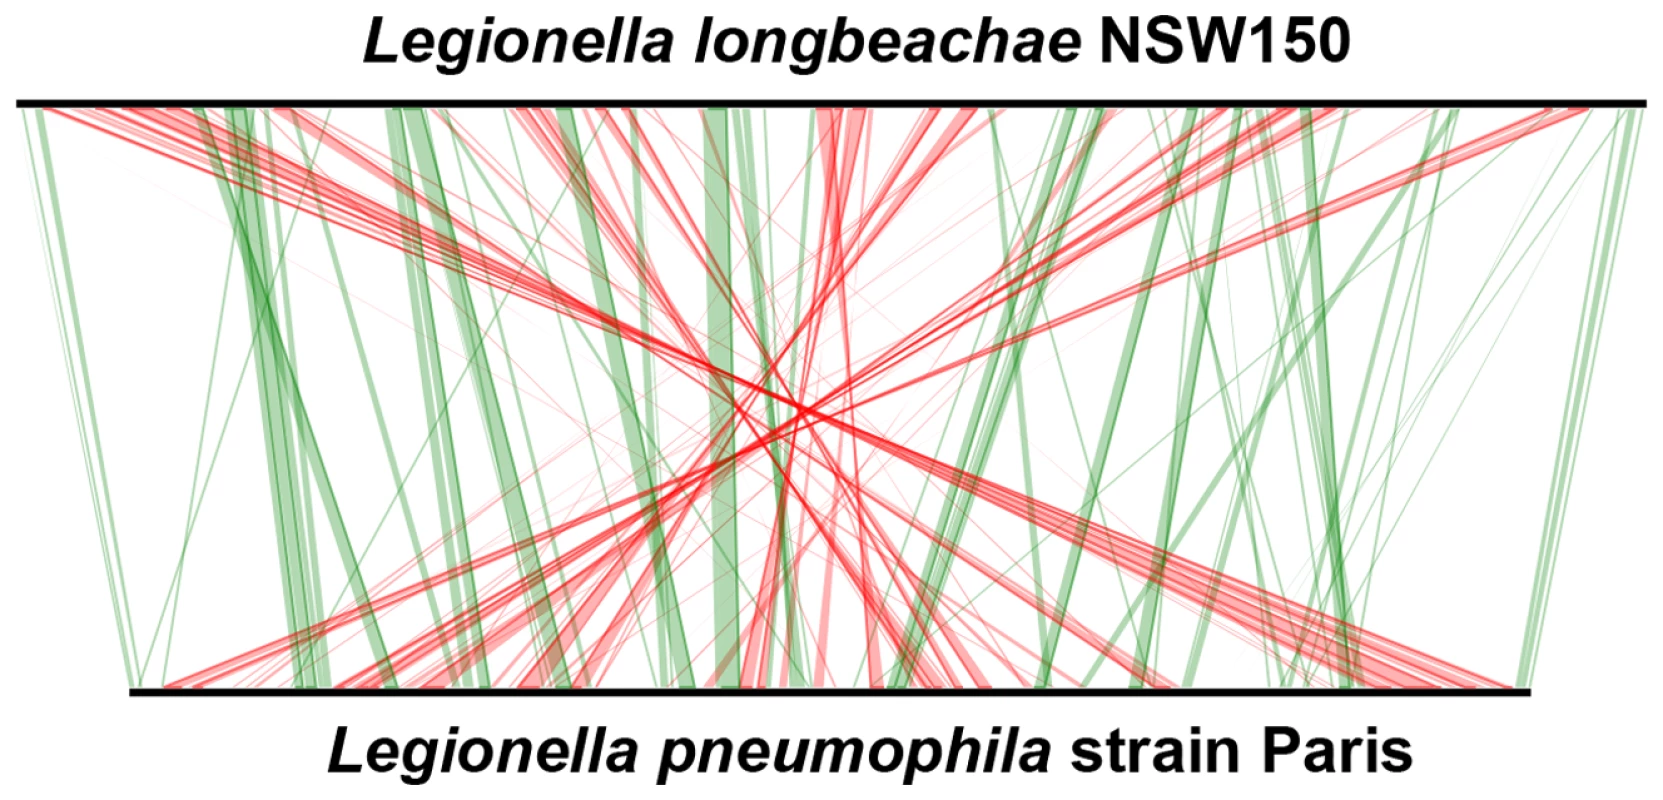 Whole-genome synteny map of <i>L.longbeachae</i> strain NSW150 and <i>L. pneumophila</i> strain Paris.